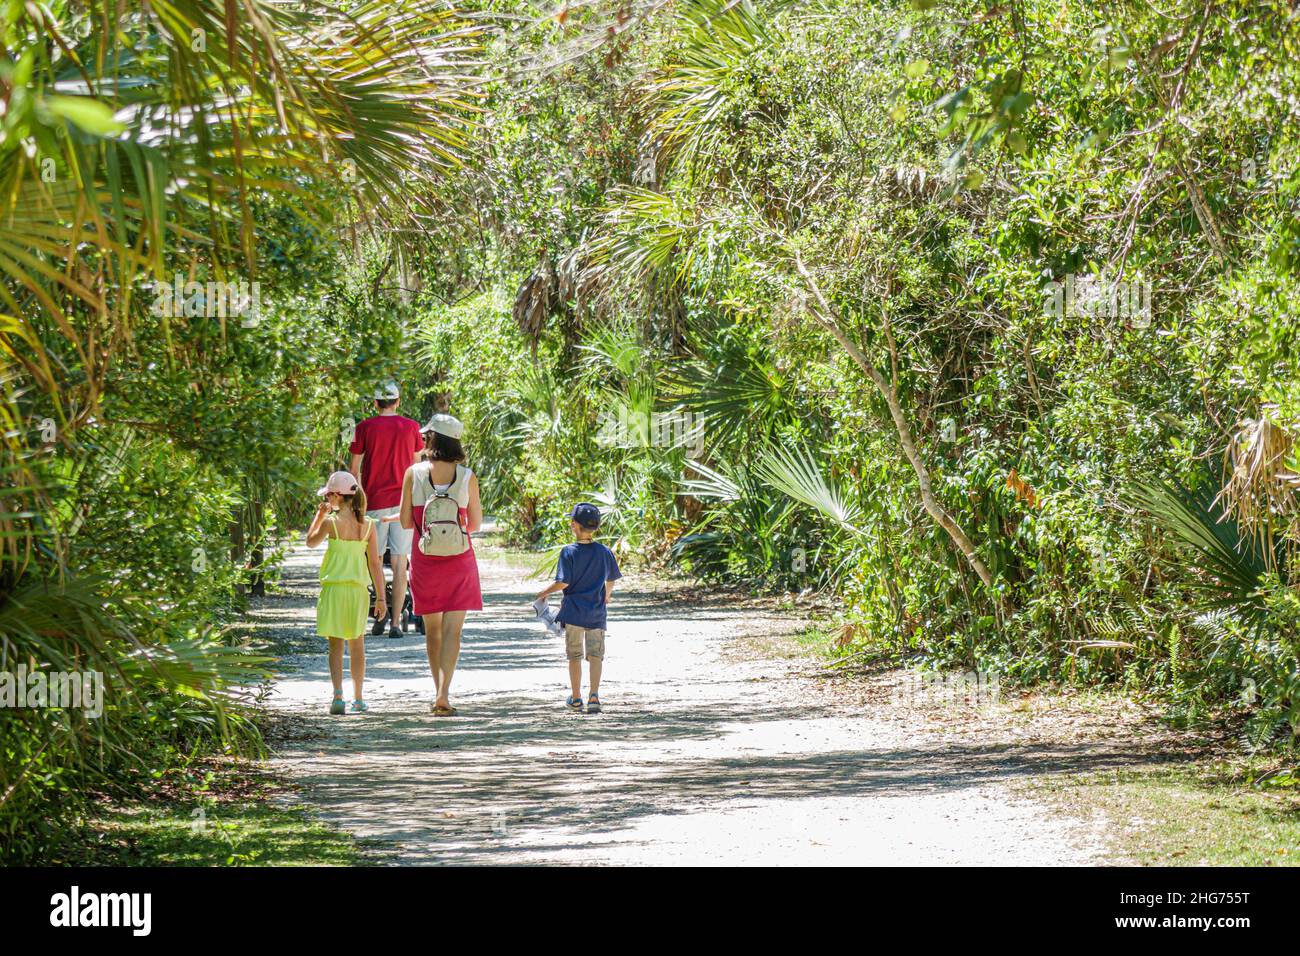 Florida Ochopee Tamiami Trail Everglades,Big Cypress National Preserve,man men male father,woman female women mother,boy boys male kid kids child chil Stock Photo